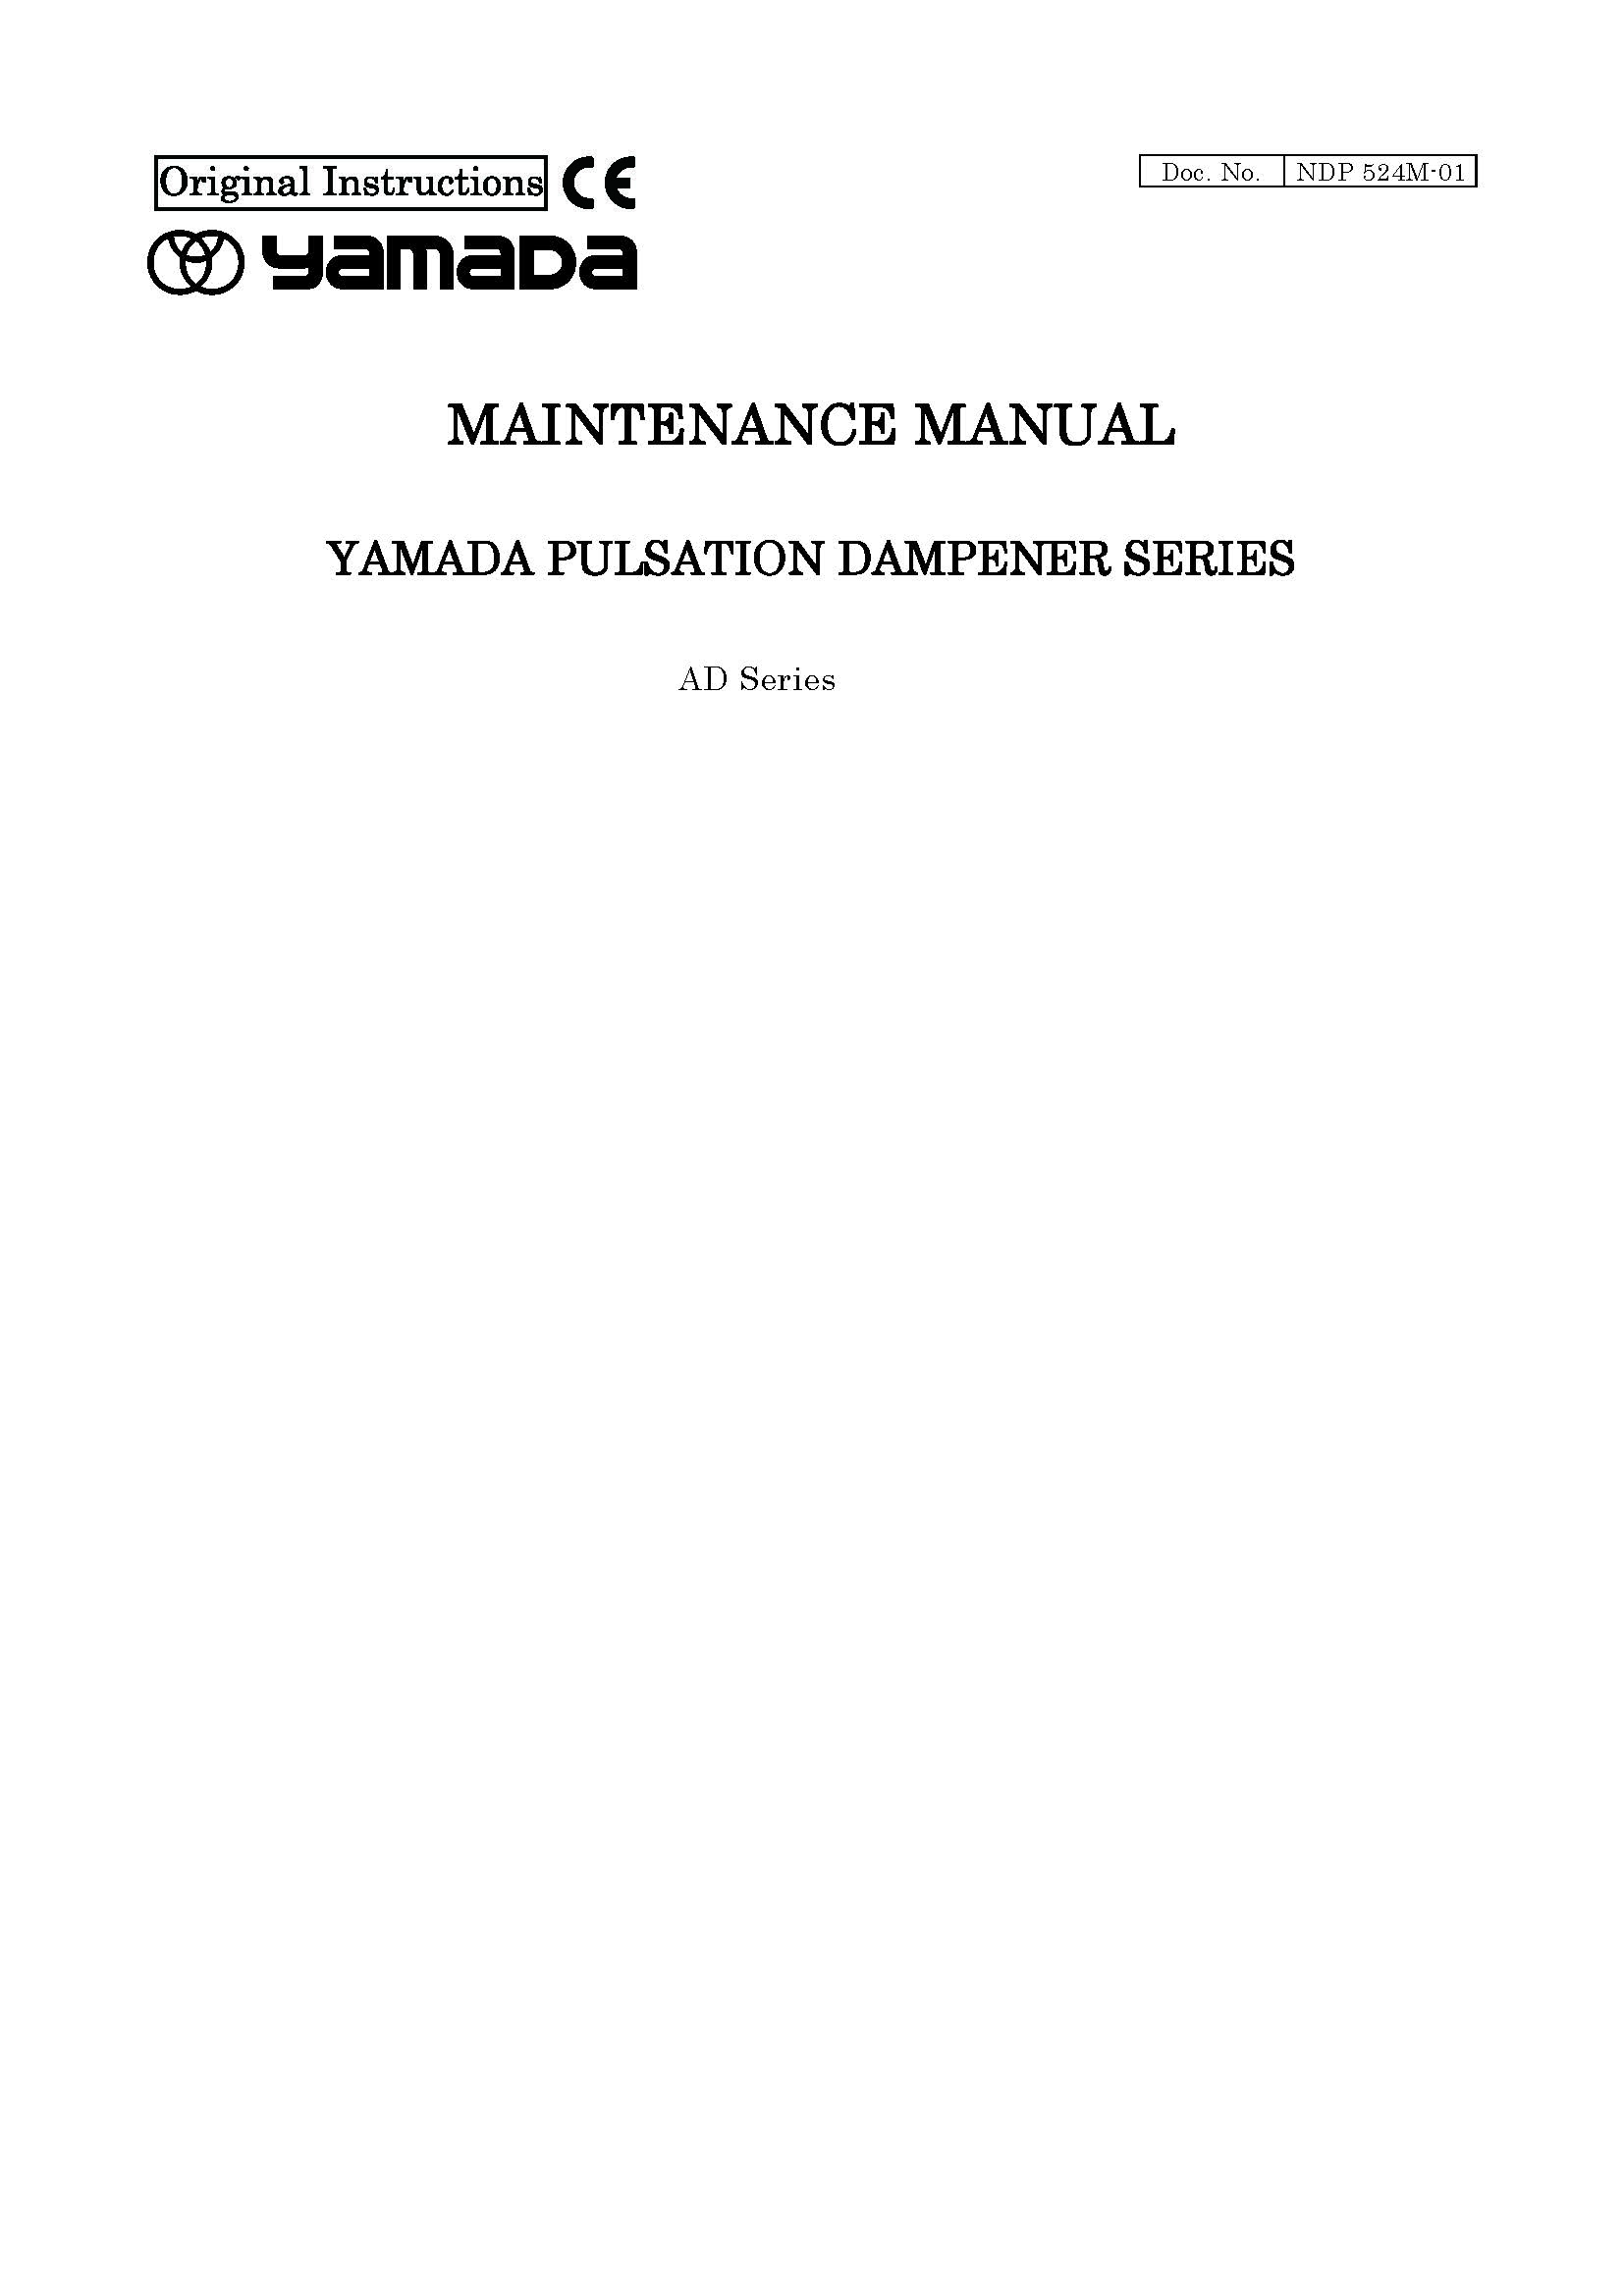 AD-Series Maintenance Manual